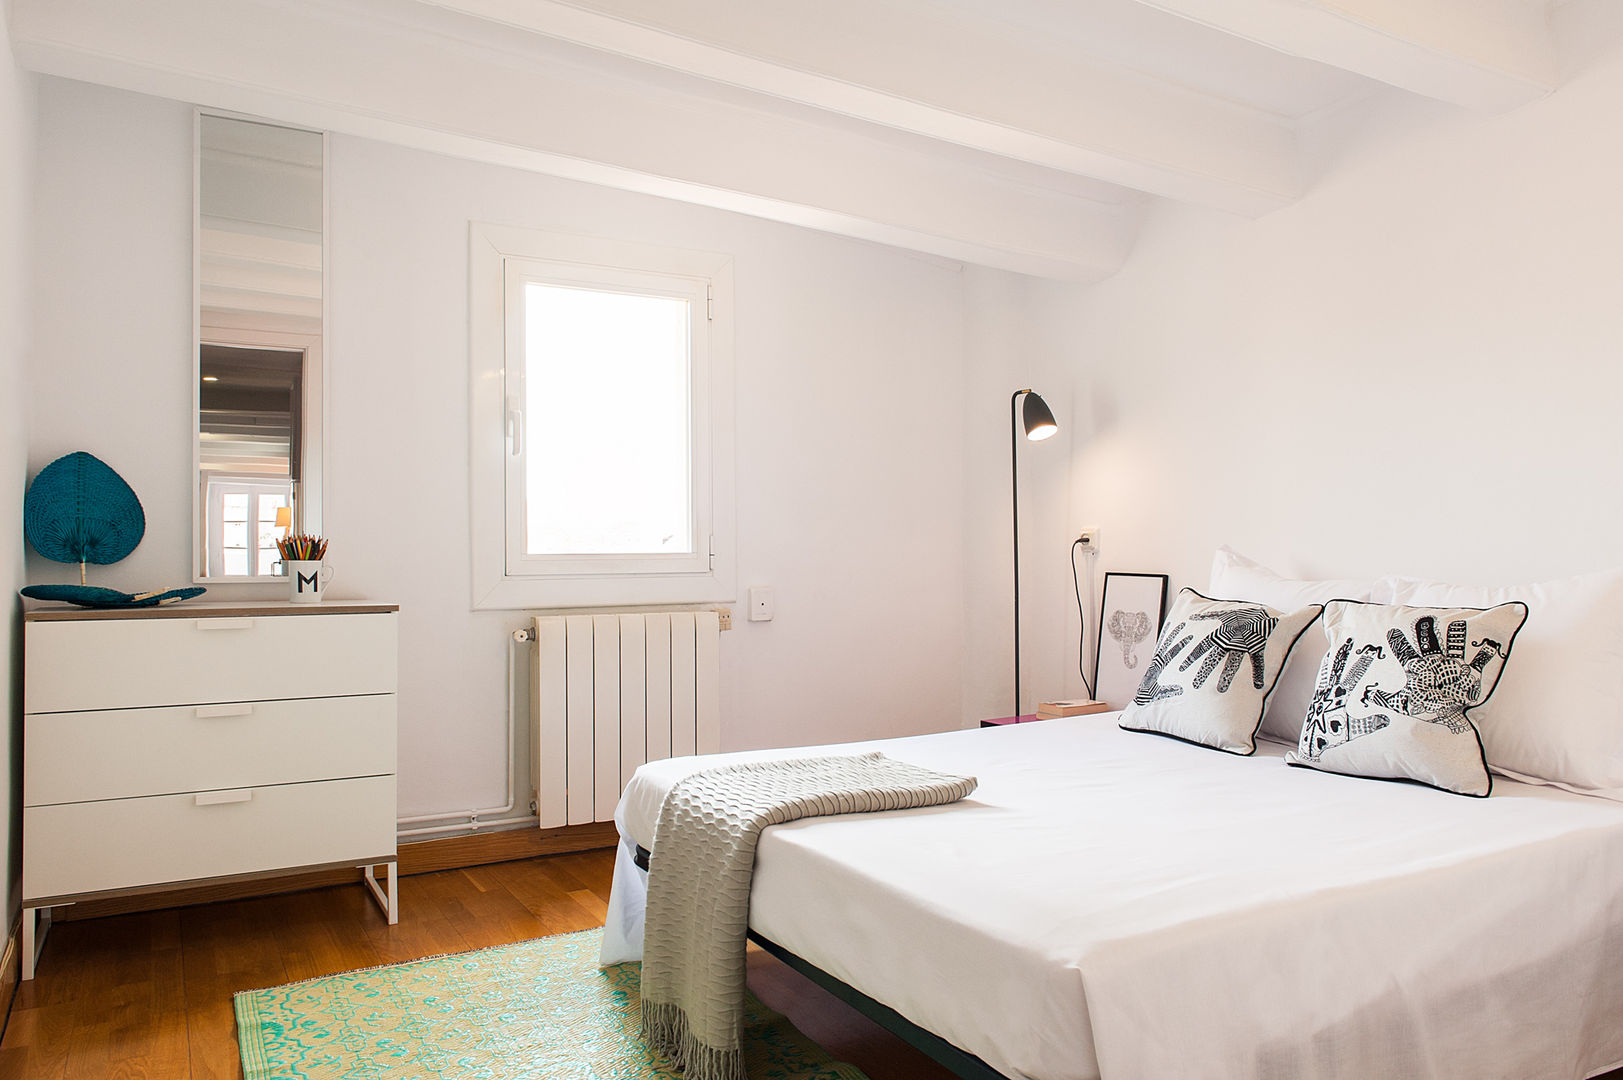 Home Staging para Alquilar una Vivienda en Barcelona, Markham Stagers Markham Stagers Moderne Schlafzimmer